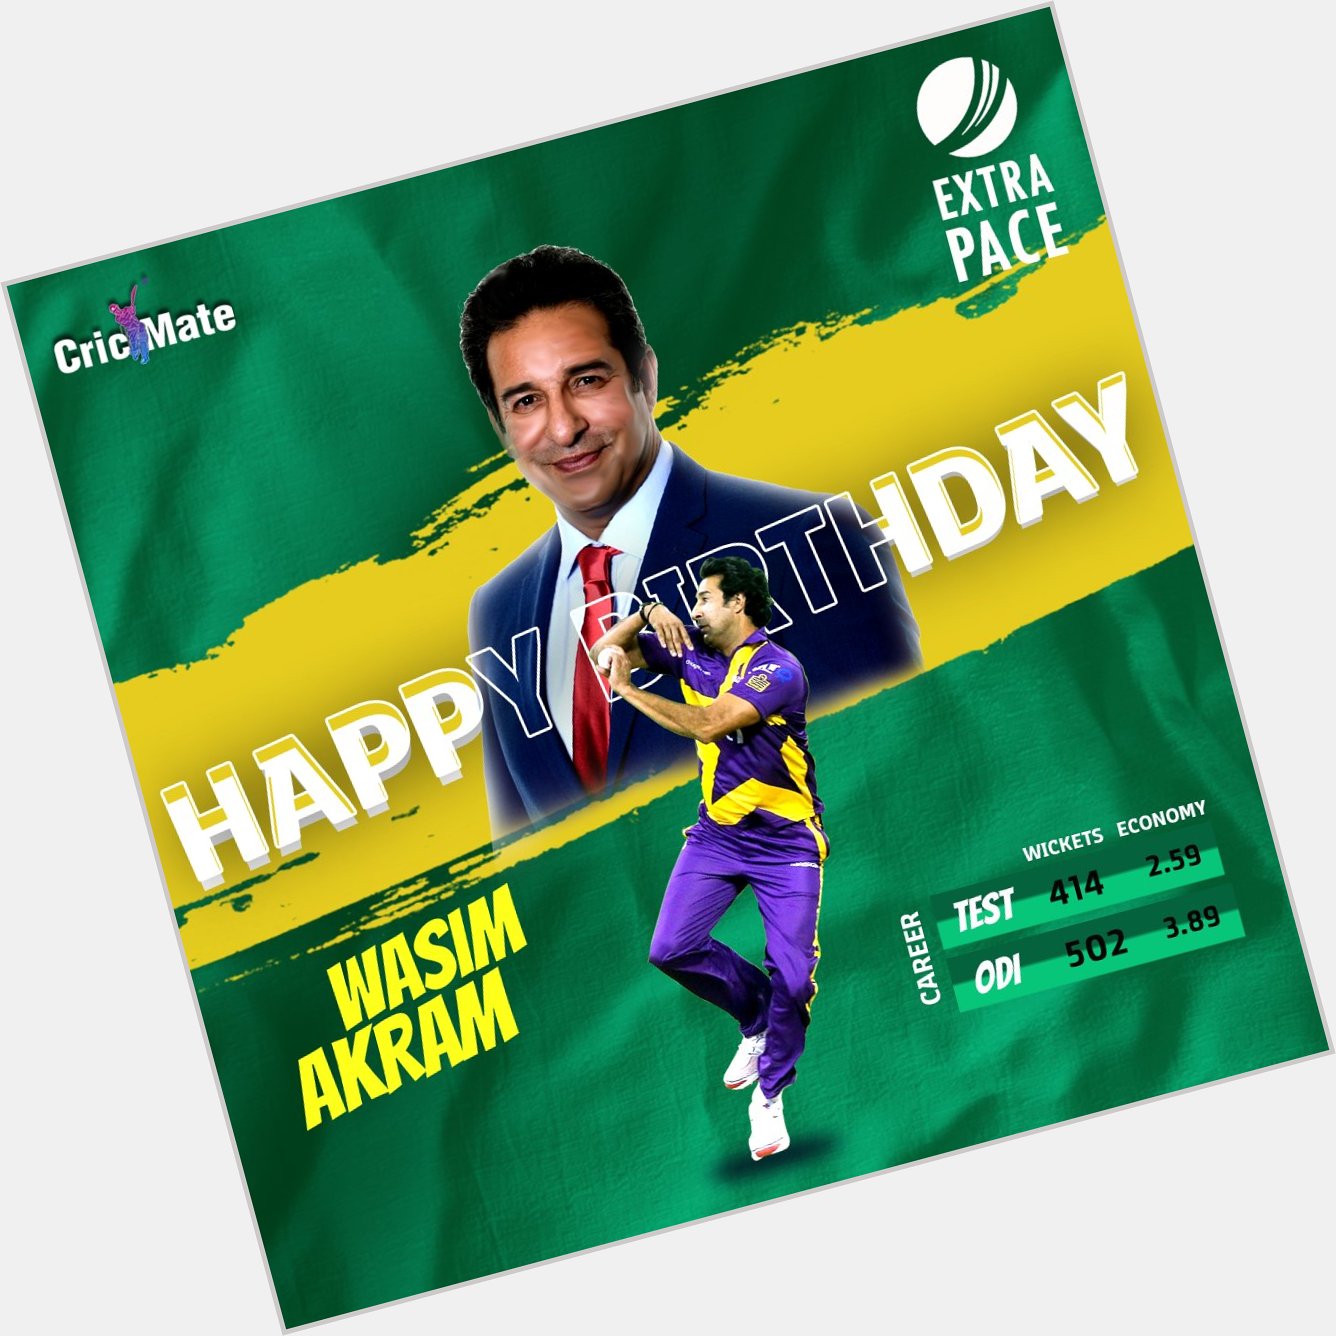 Happy Birthday Wasim Akram. Wishes from  